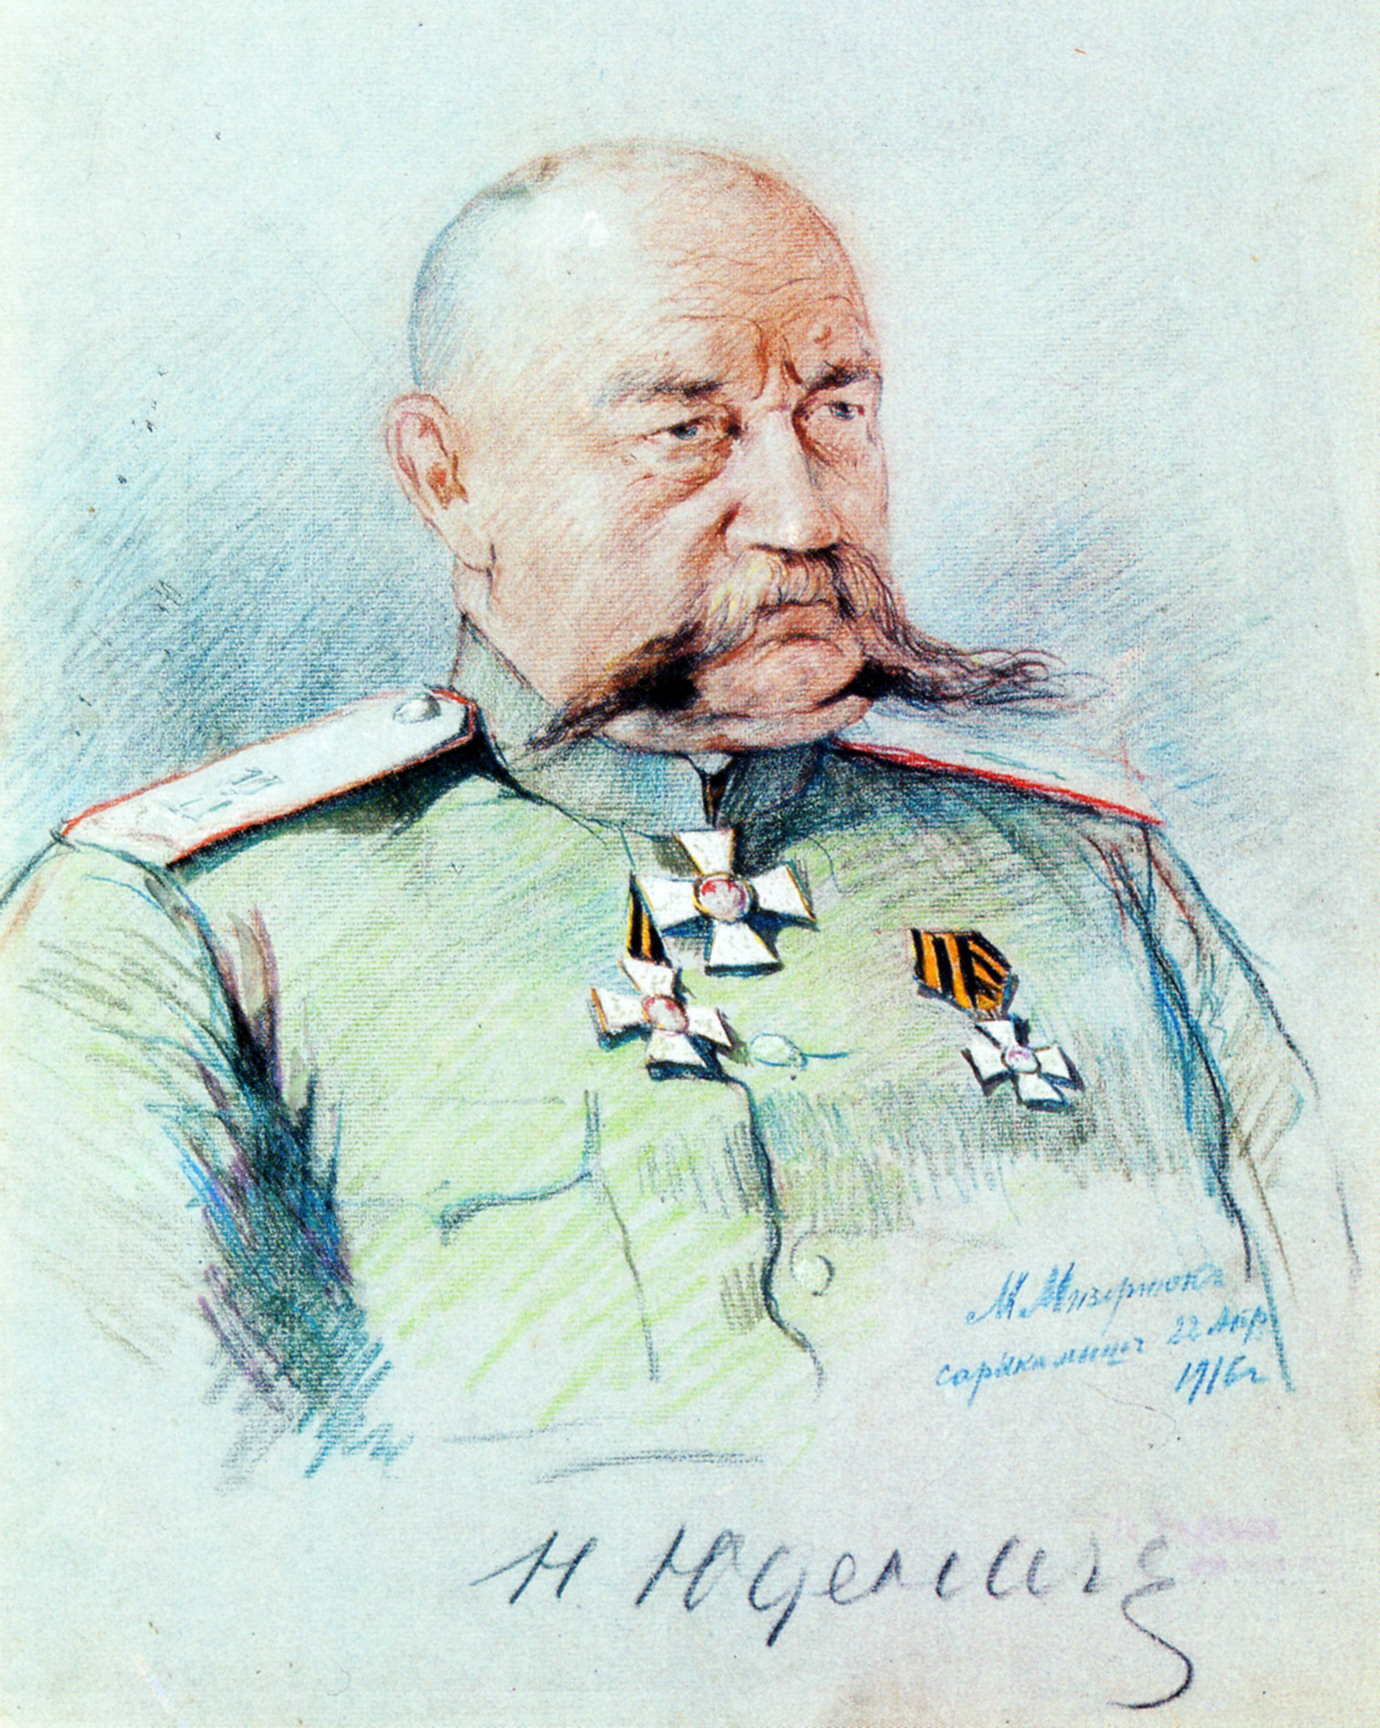 Pildiotsingu Nikolai Judenitš 1919 tulemus